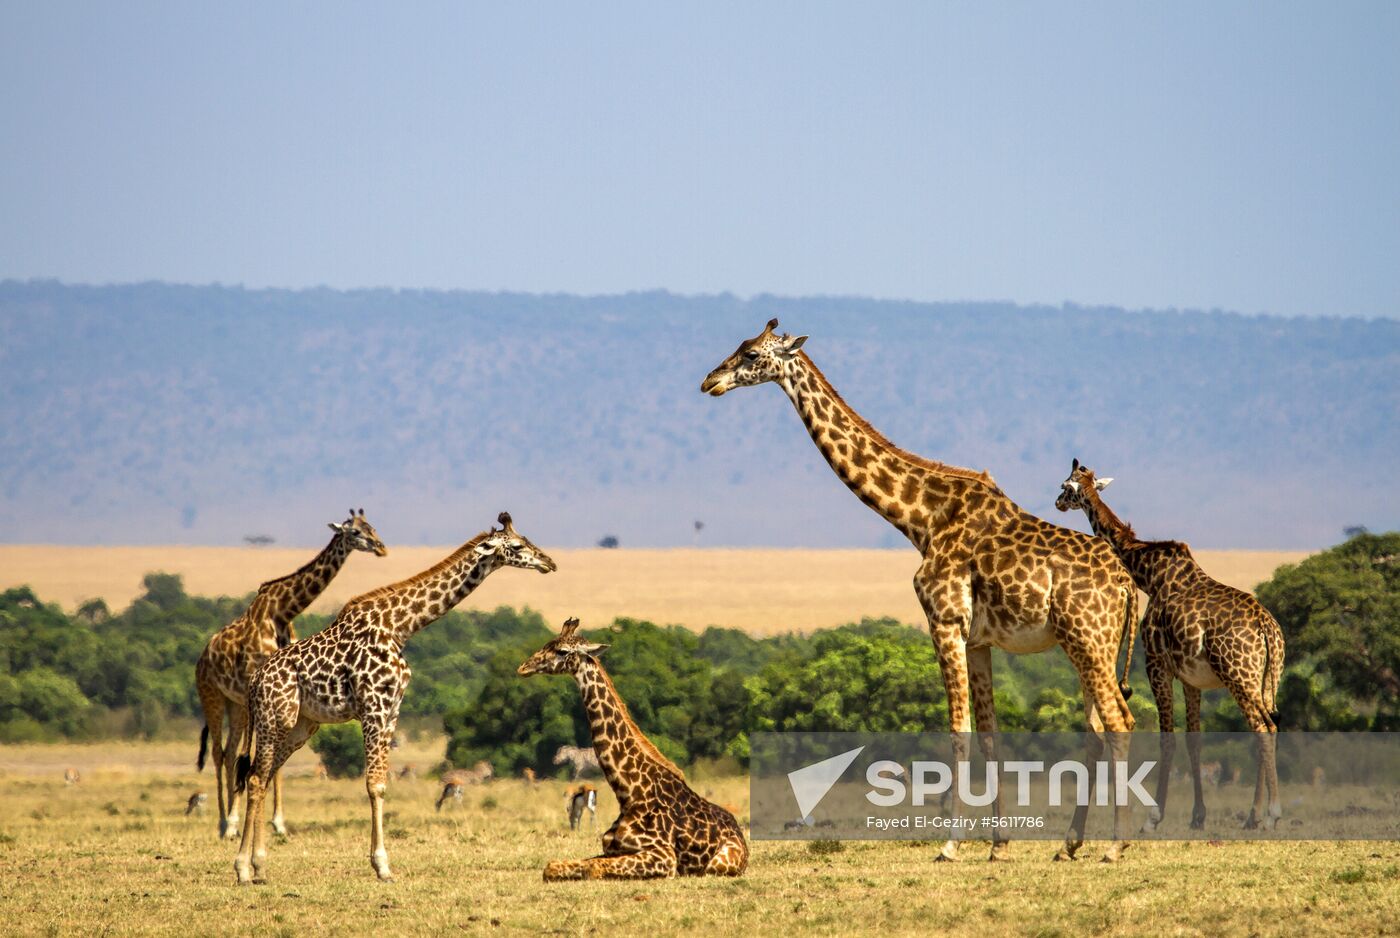 Kenya's Maasai Mara National Reserve